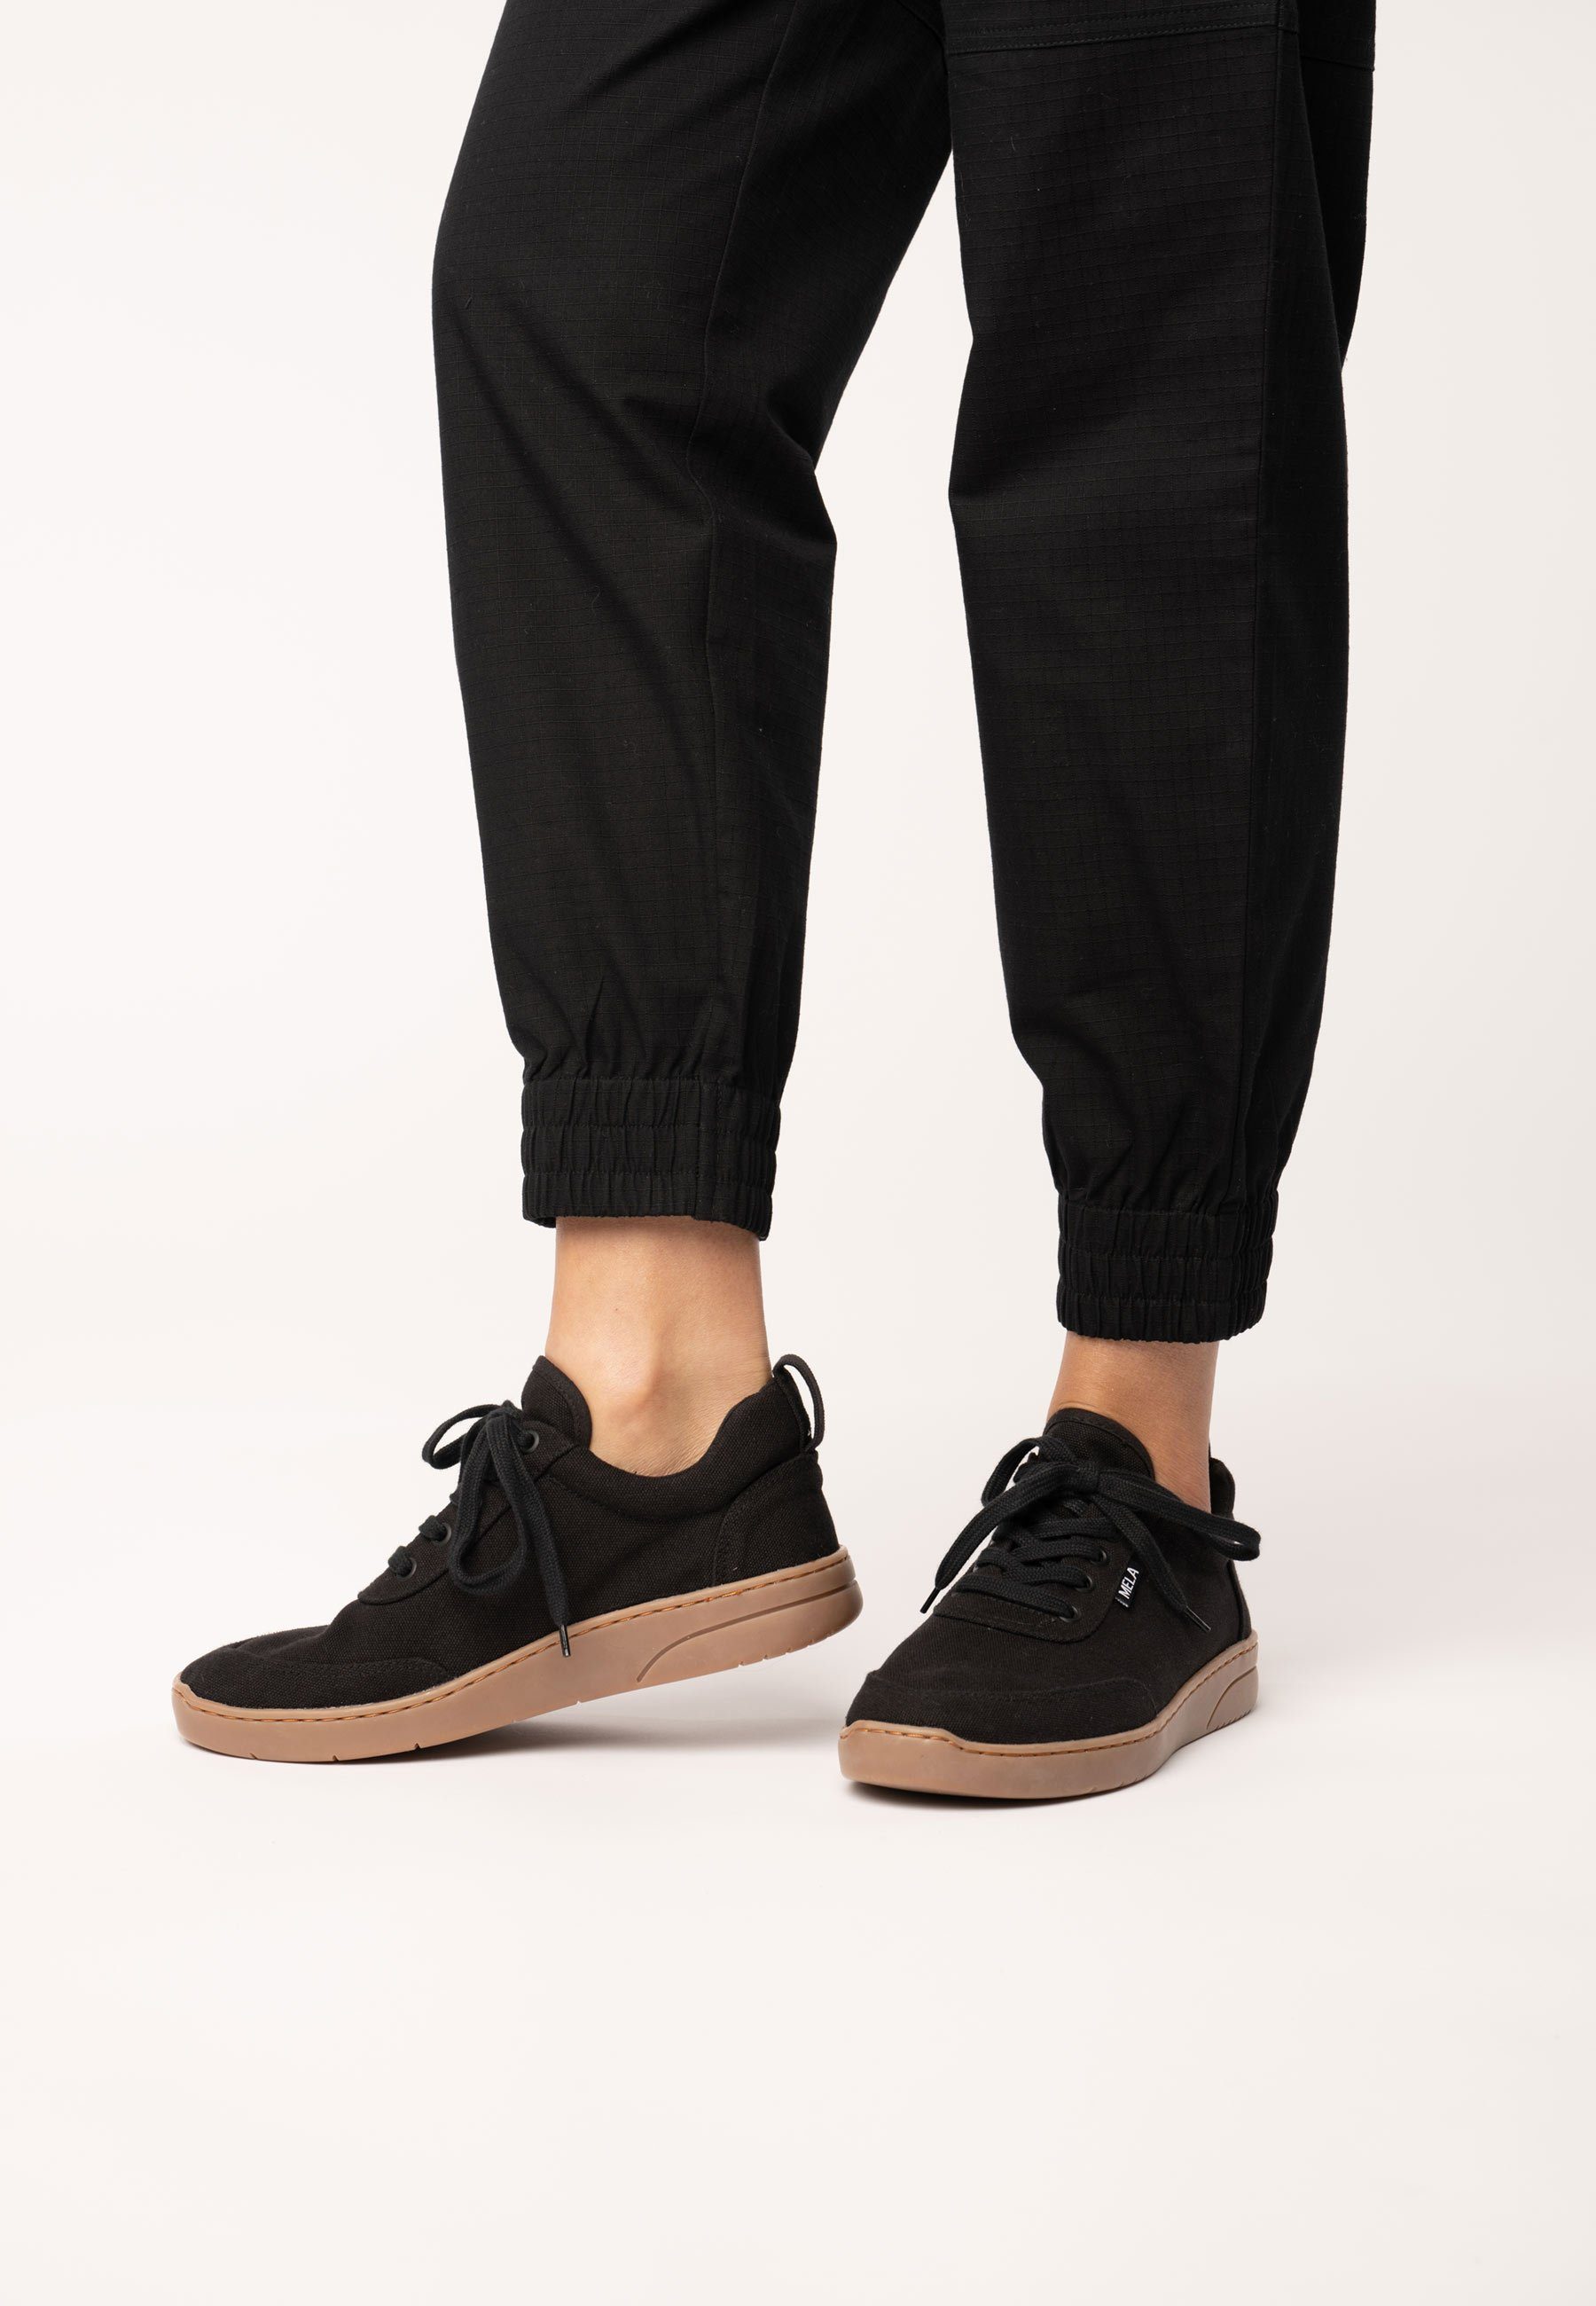 MELA Damen Sneaker YALA / Sneaker Paar zusätzlichem schwarz Schnürsenkel gum inklusive